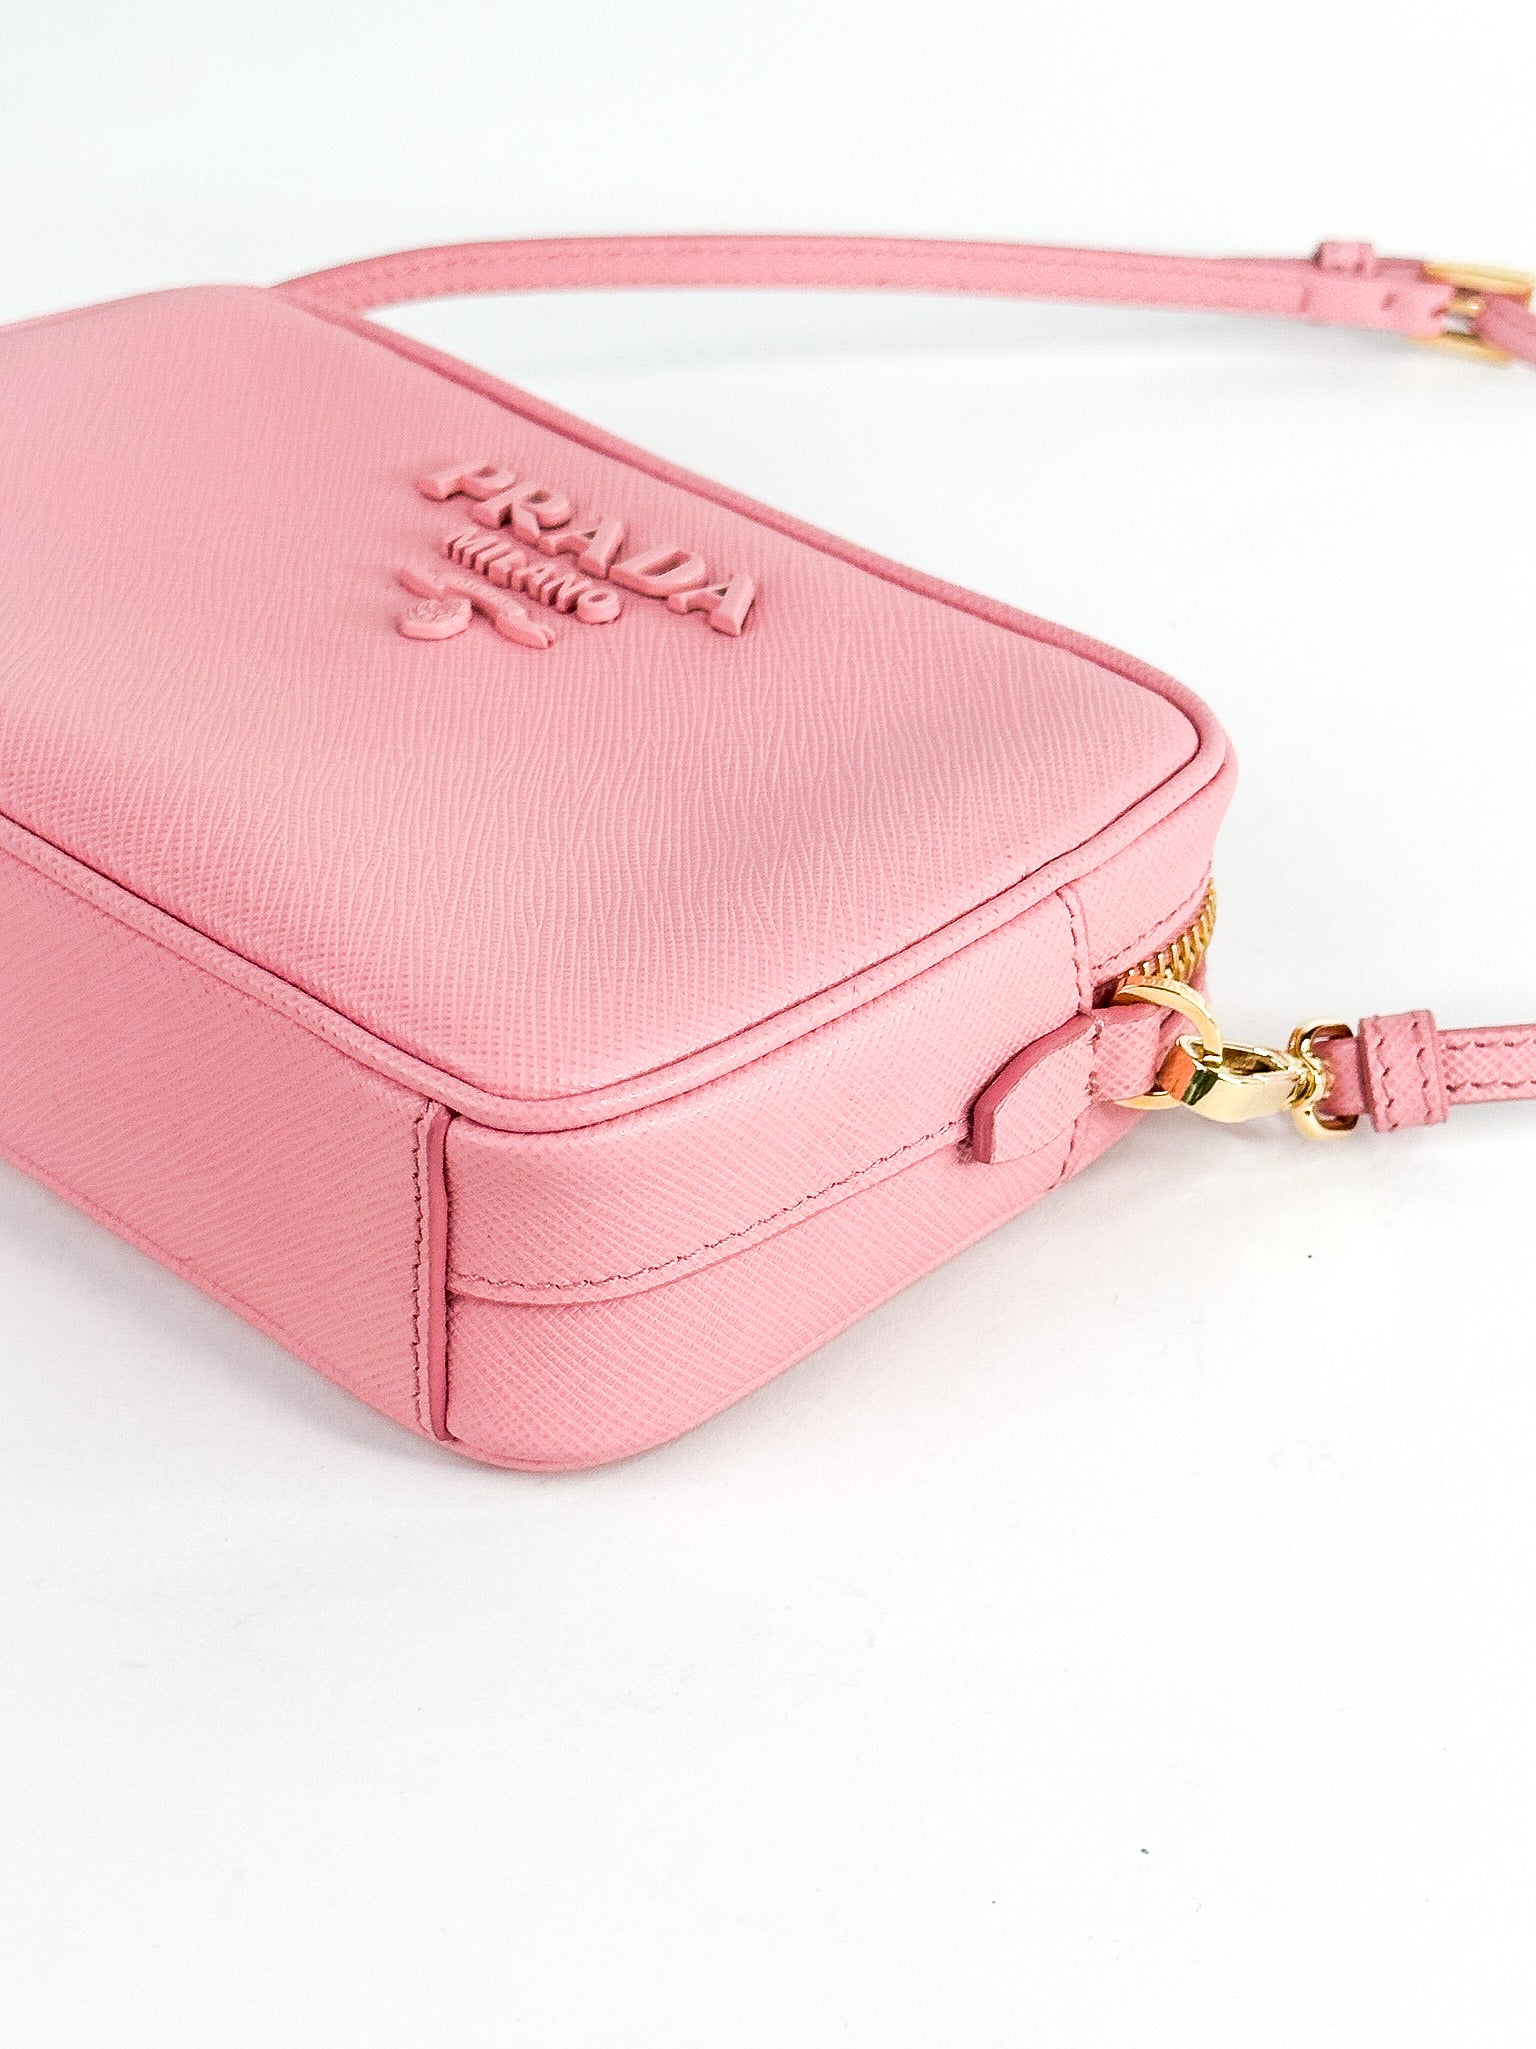 Prada Pink Saffiano Lux Leather Camera Crossbody Bag